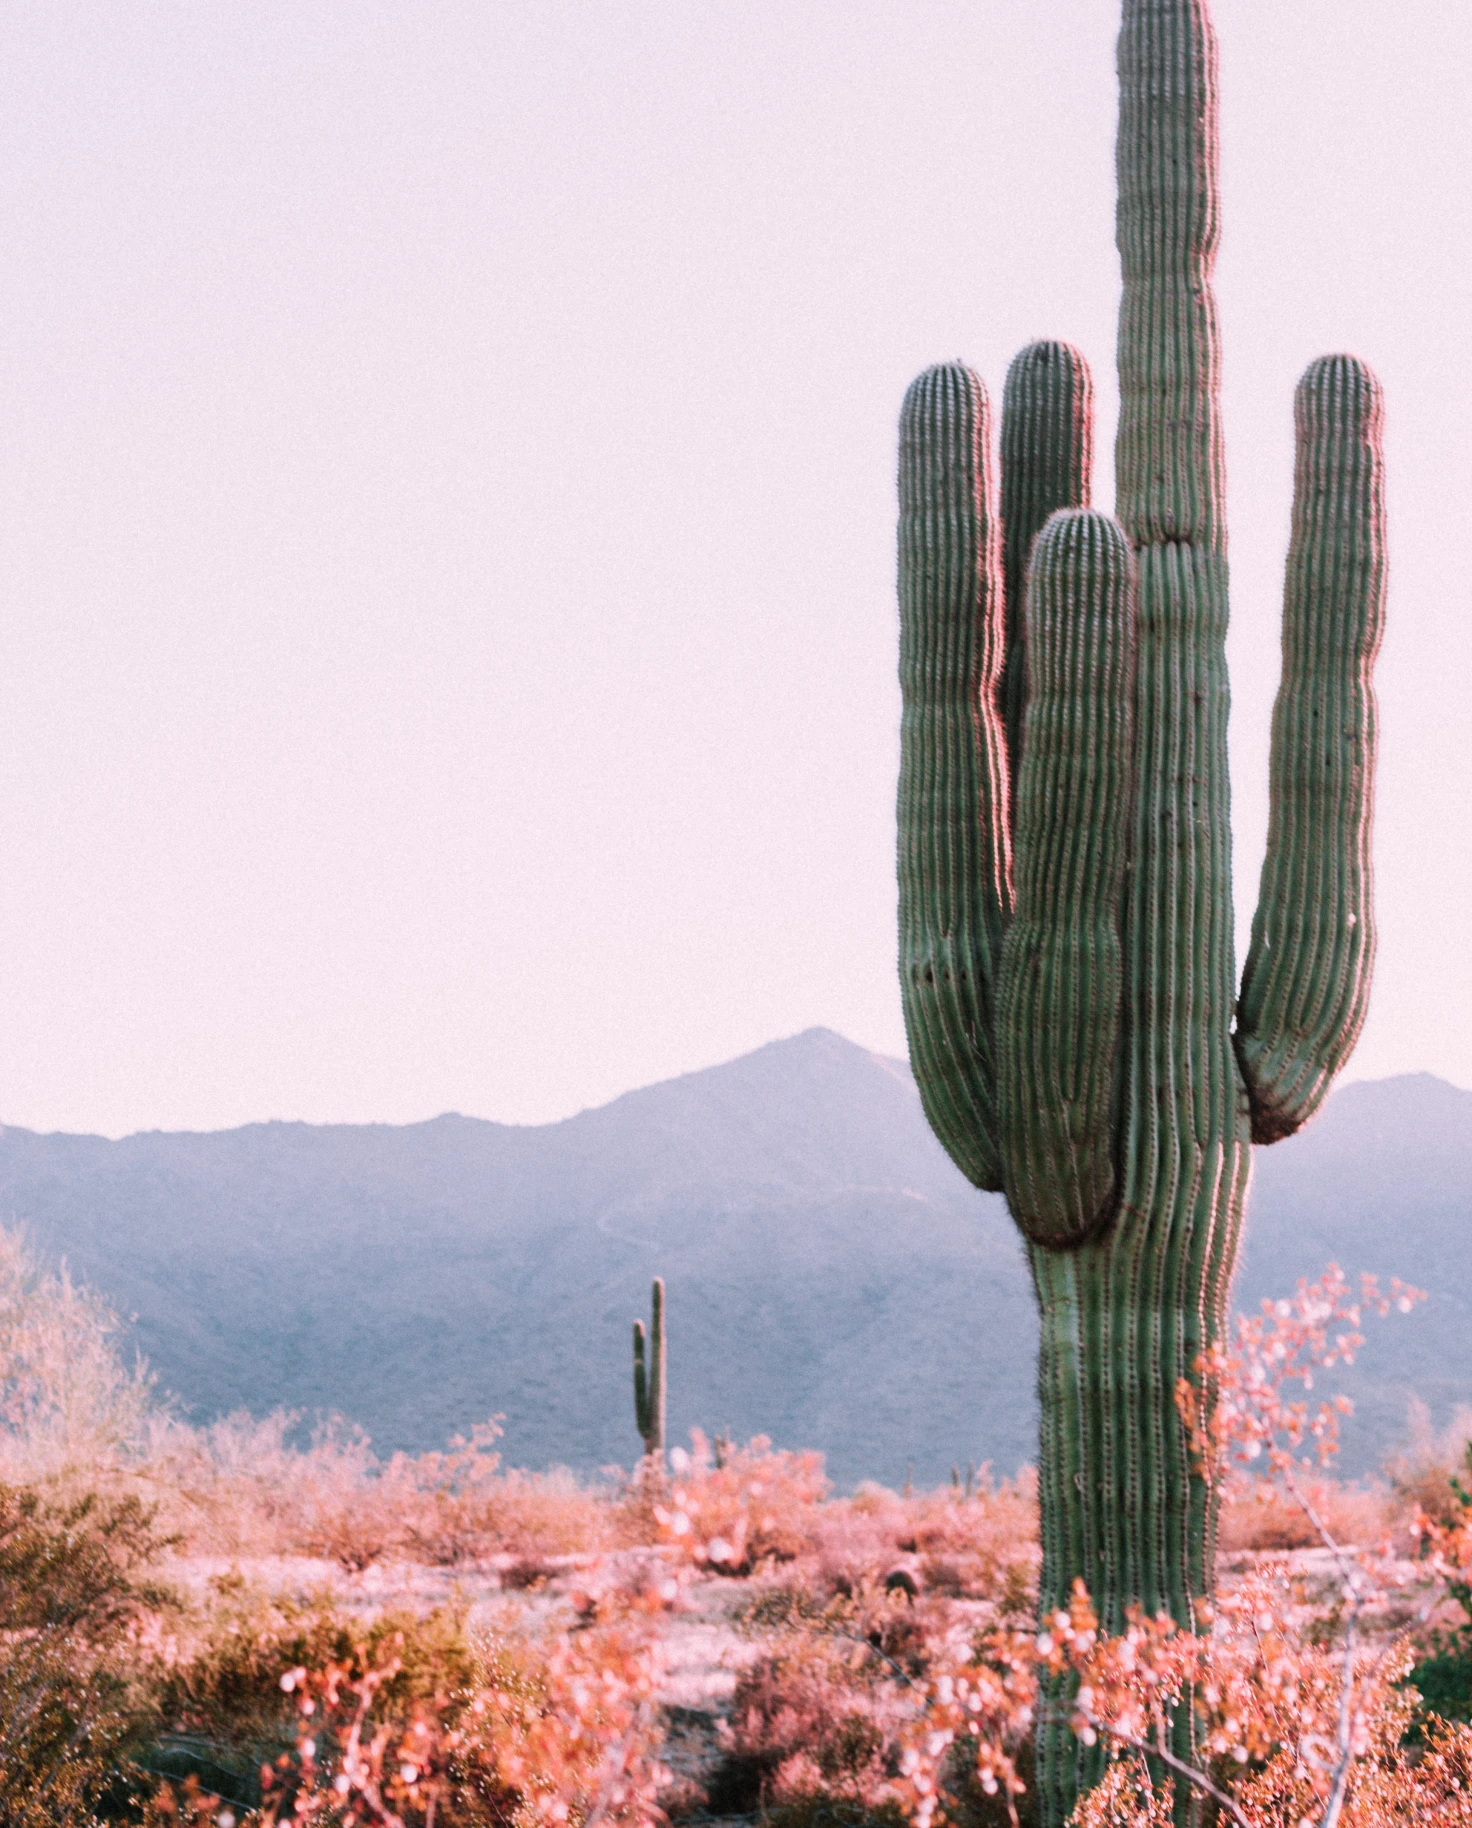 Desert cactus in Phoenix, Arizona. 